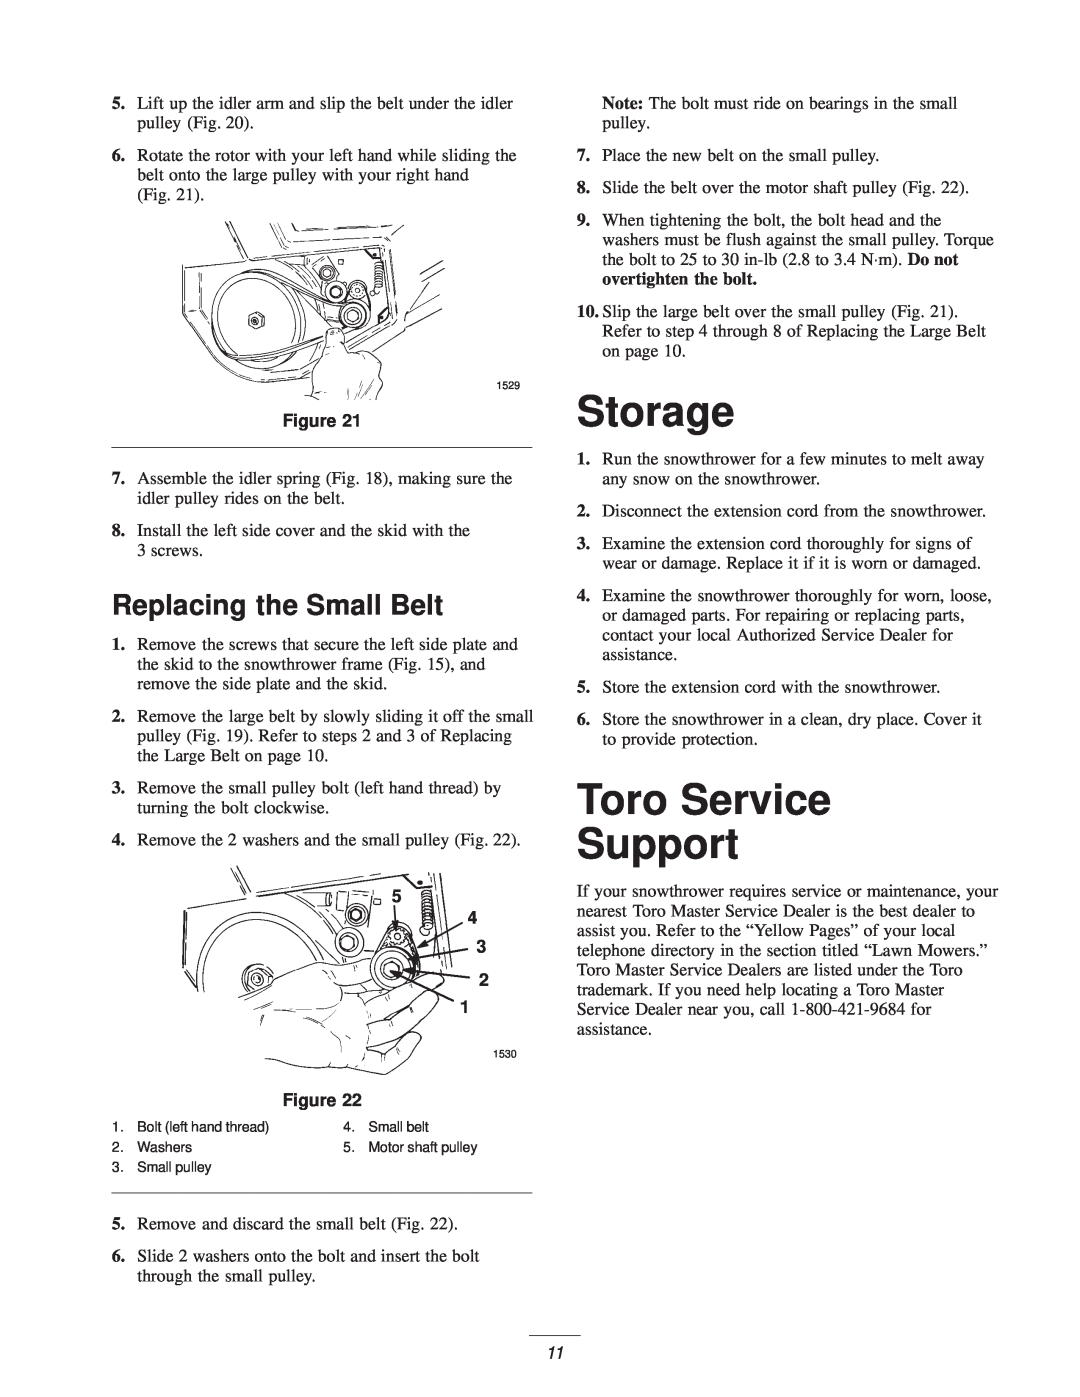 Toro 3.80E+13 manual Storage, Toro Service Support, Replacing the Small Belt 